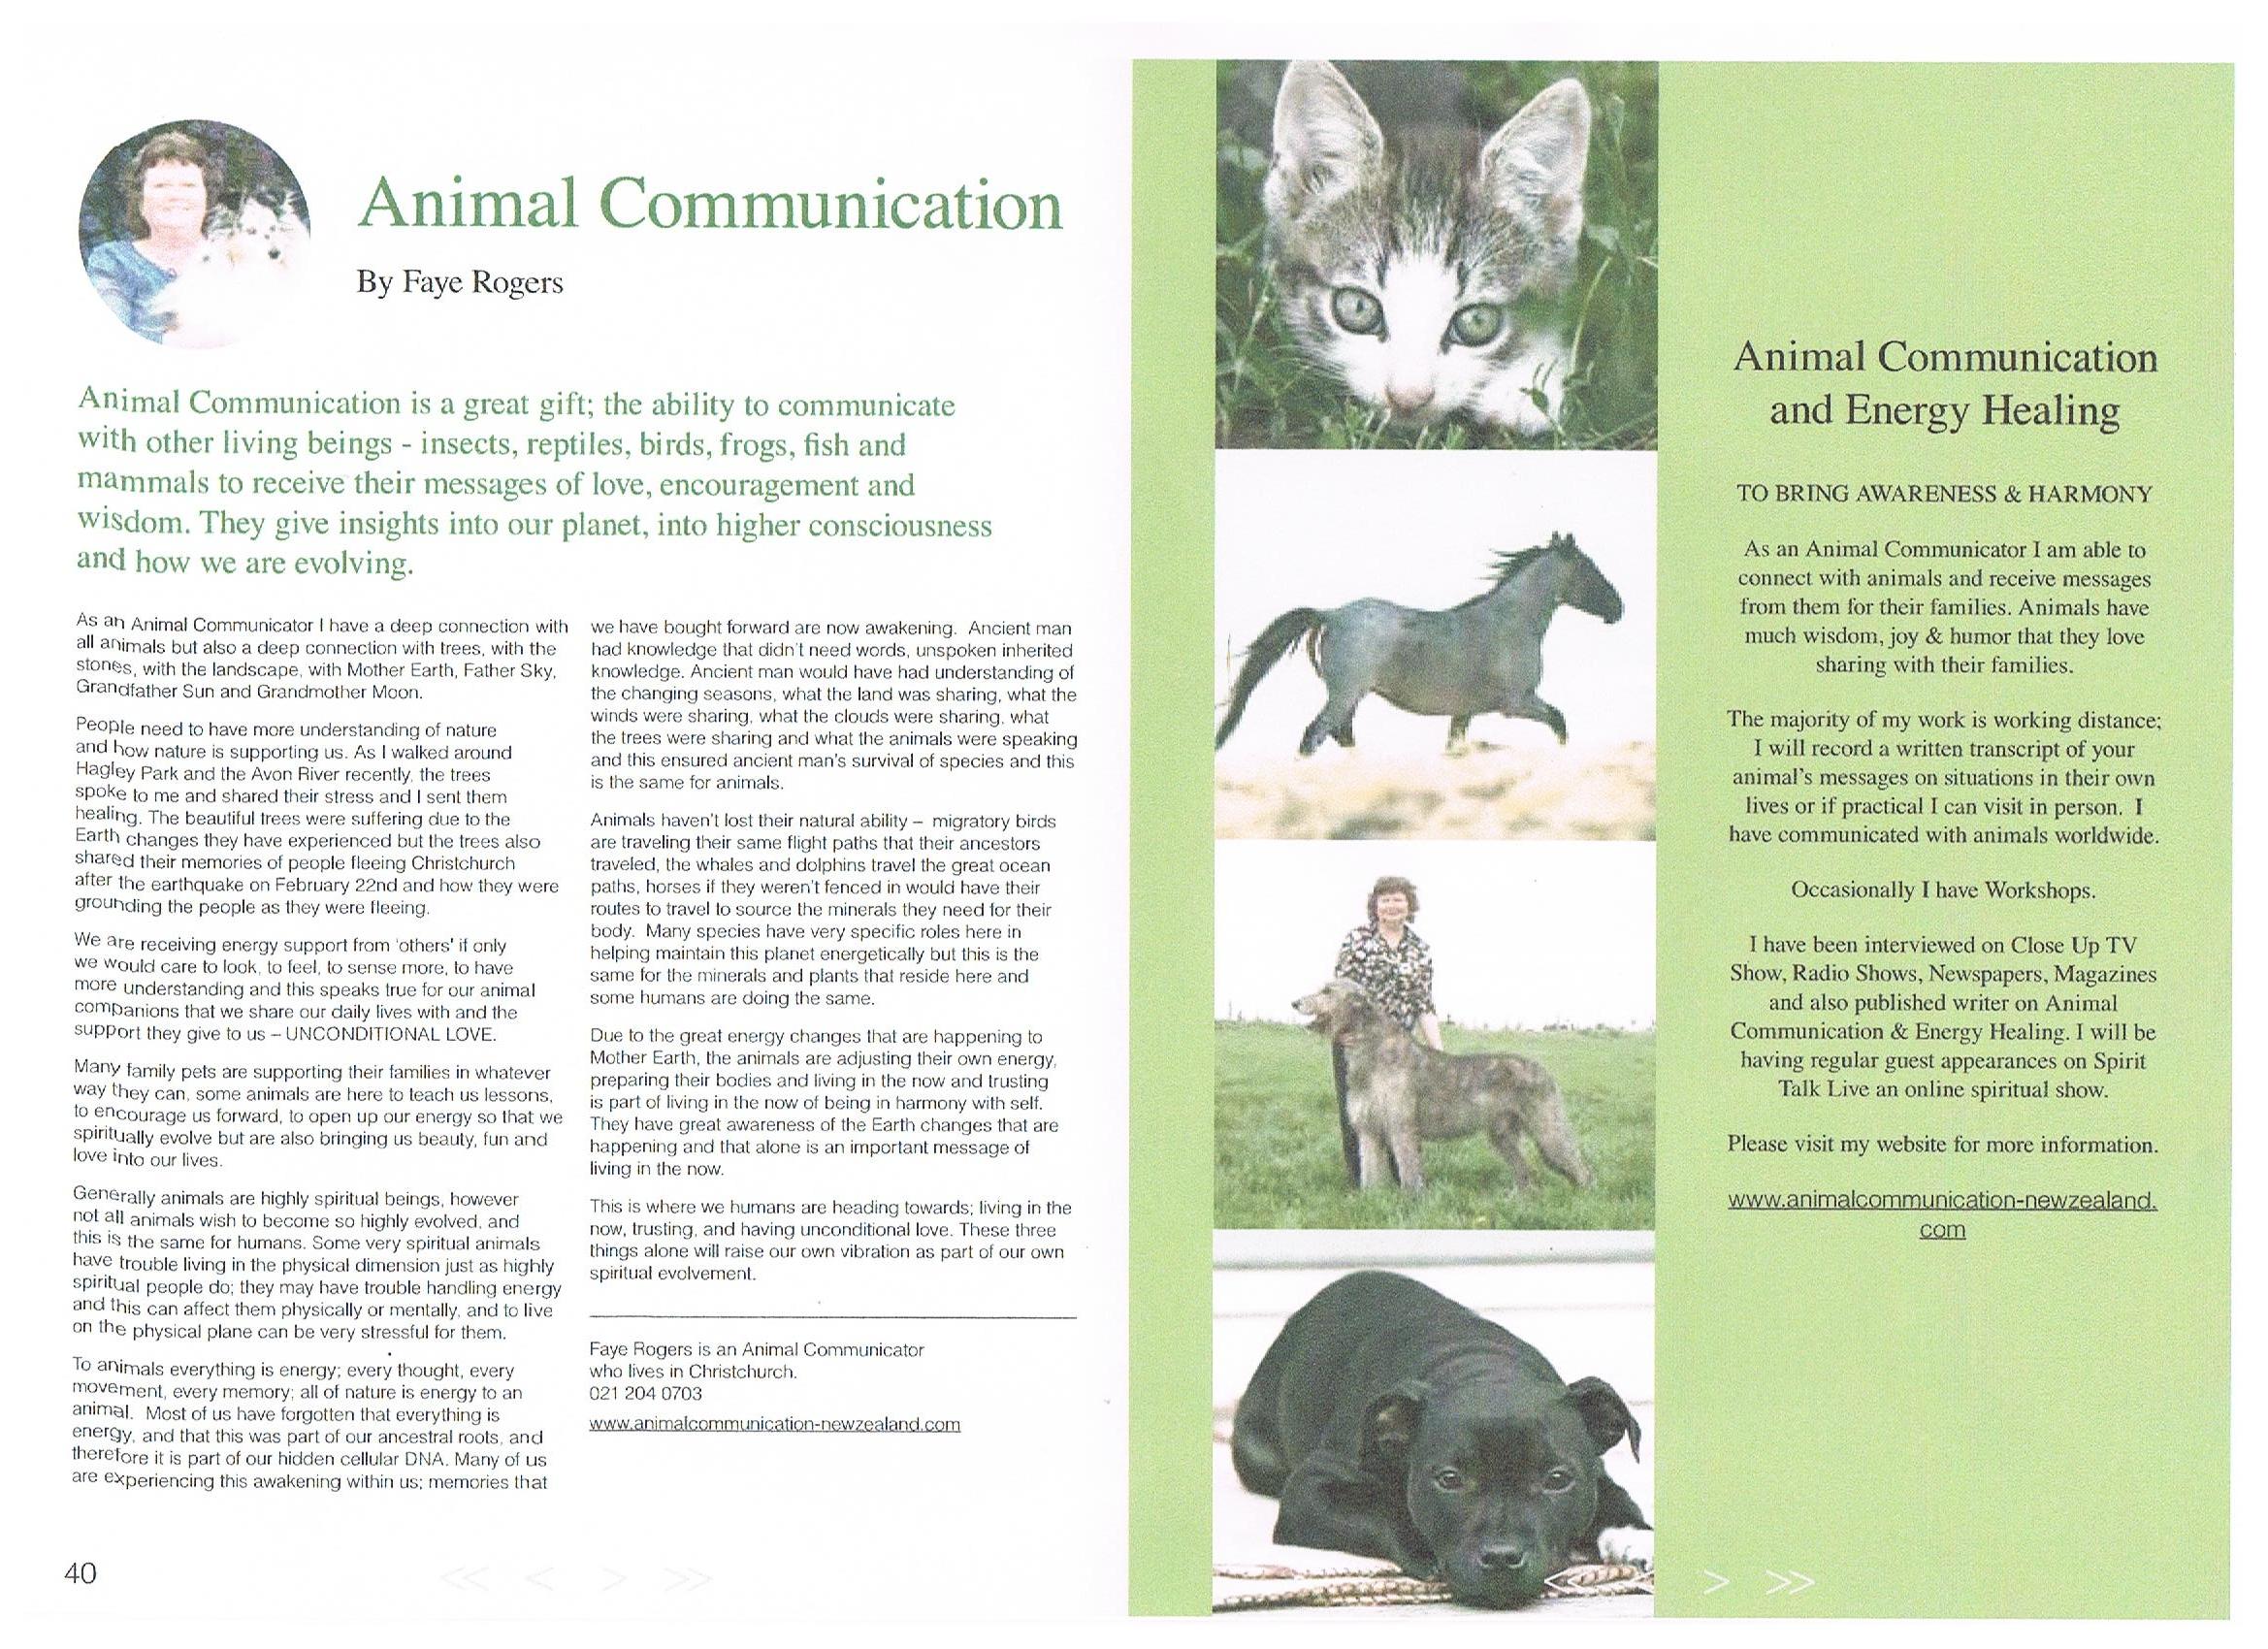 Into Light Magazine - September 2011 - Animal Communication - Faye Rogers -  Animal Communication - New Zealand